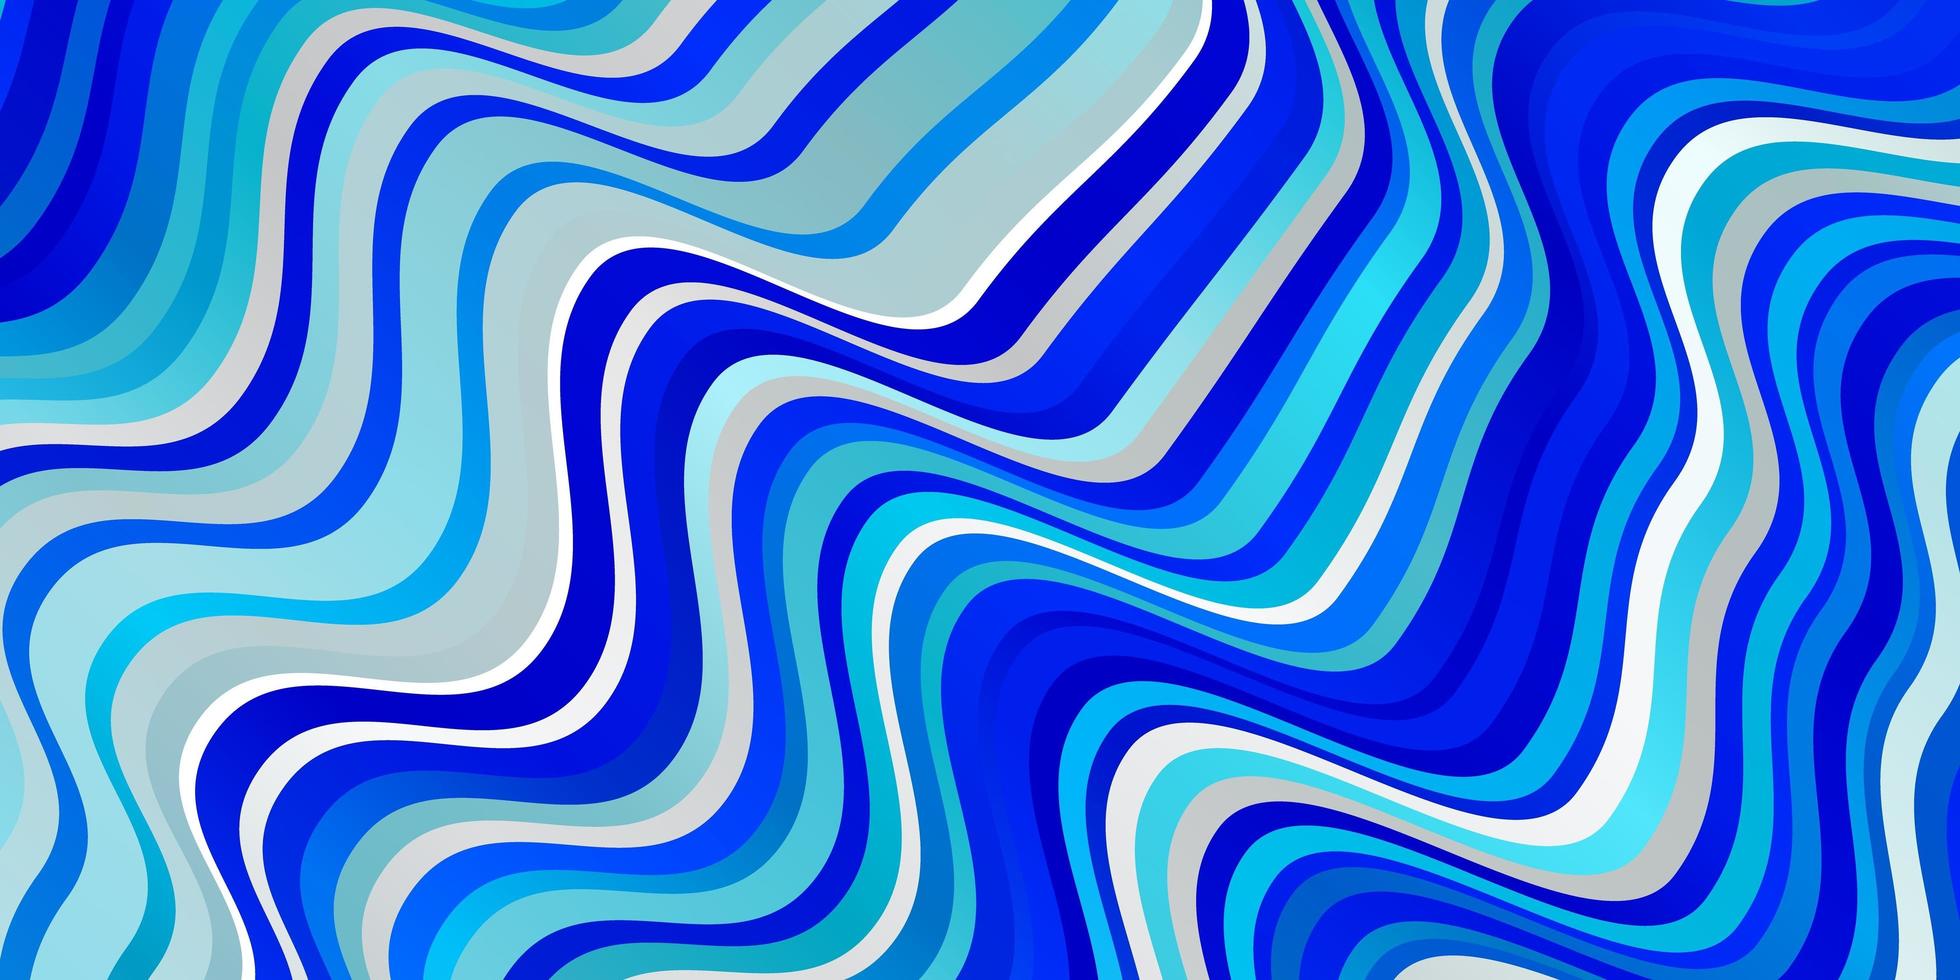 hellblaues Vektormuster mit schiefen Linien vektor